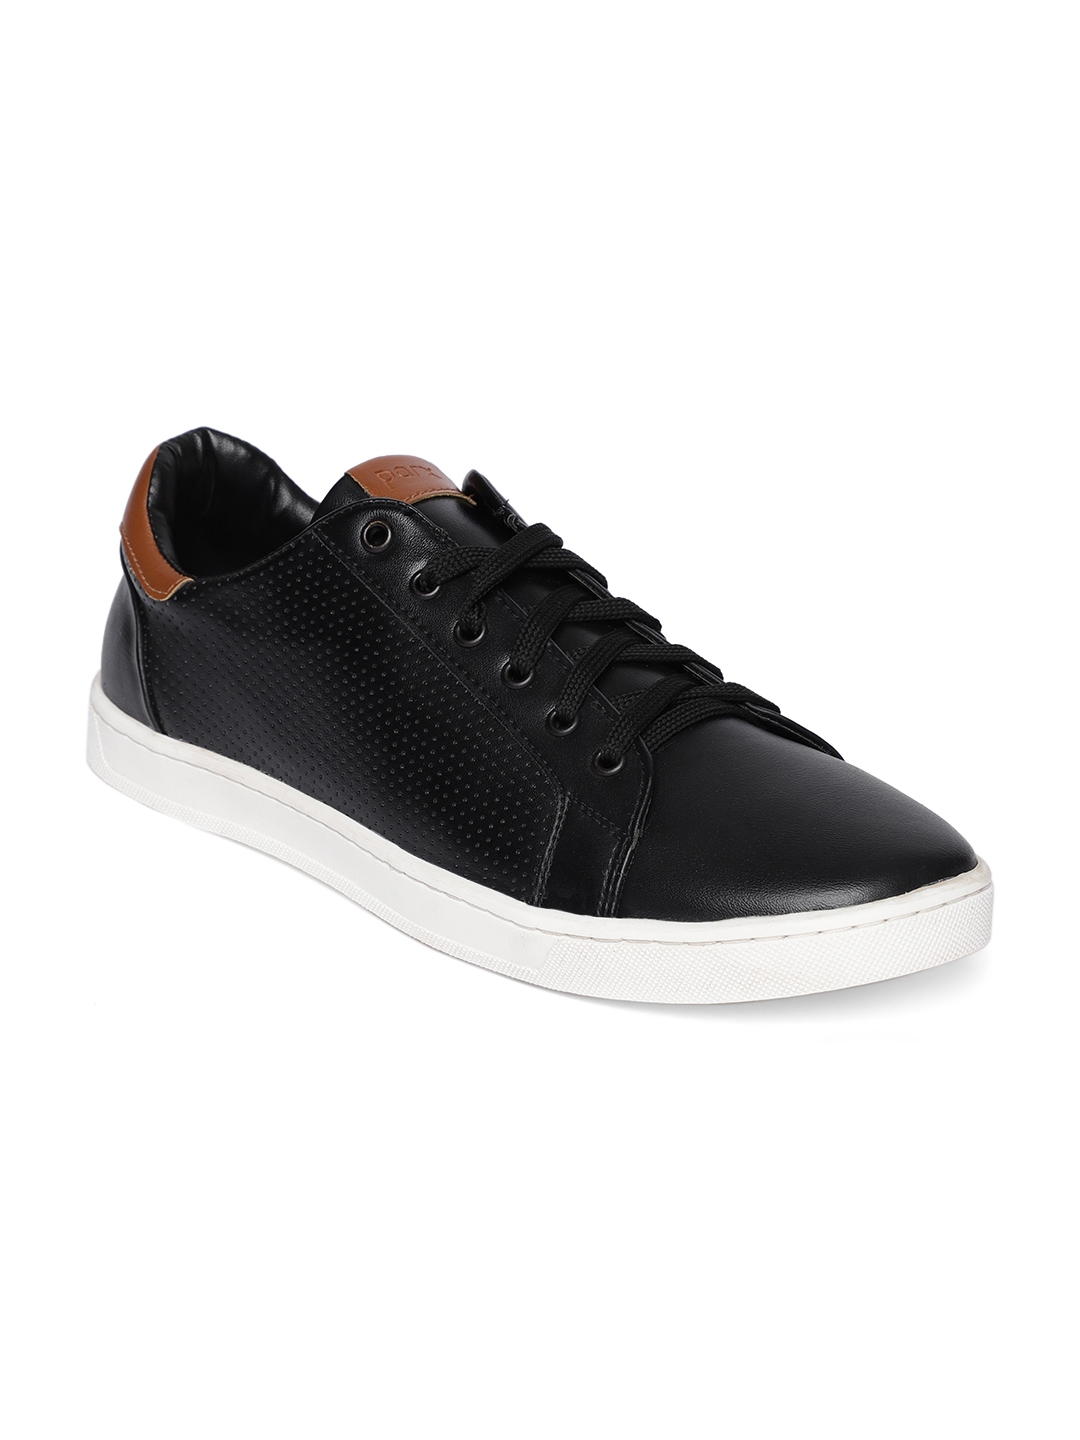 Buy Parx Men Black Sneakers - Casual Shoes for Men 10274611 | Myntra